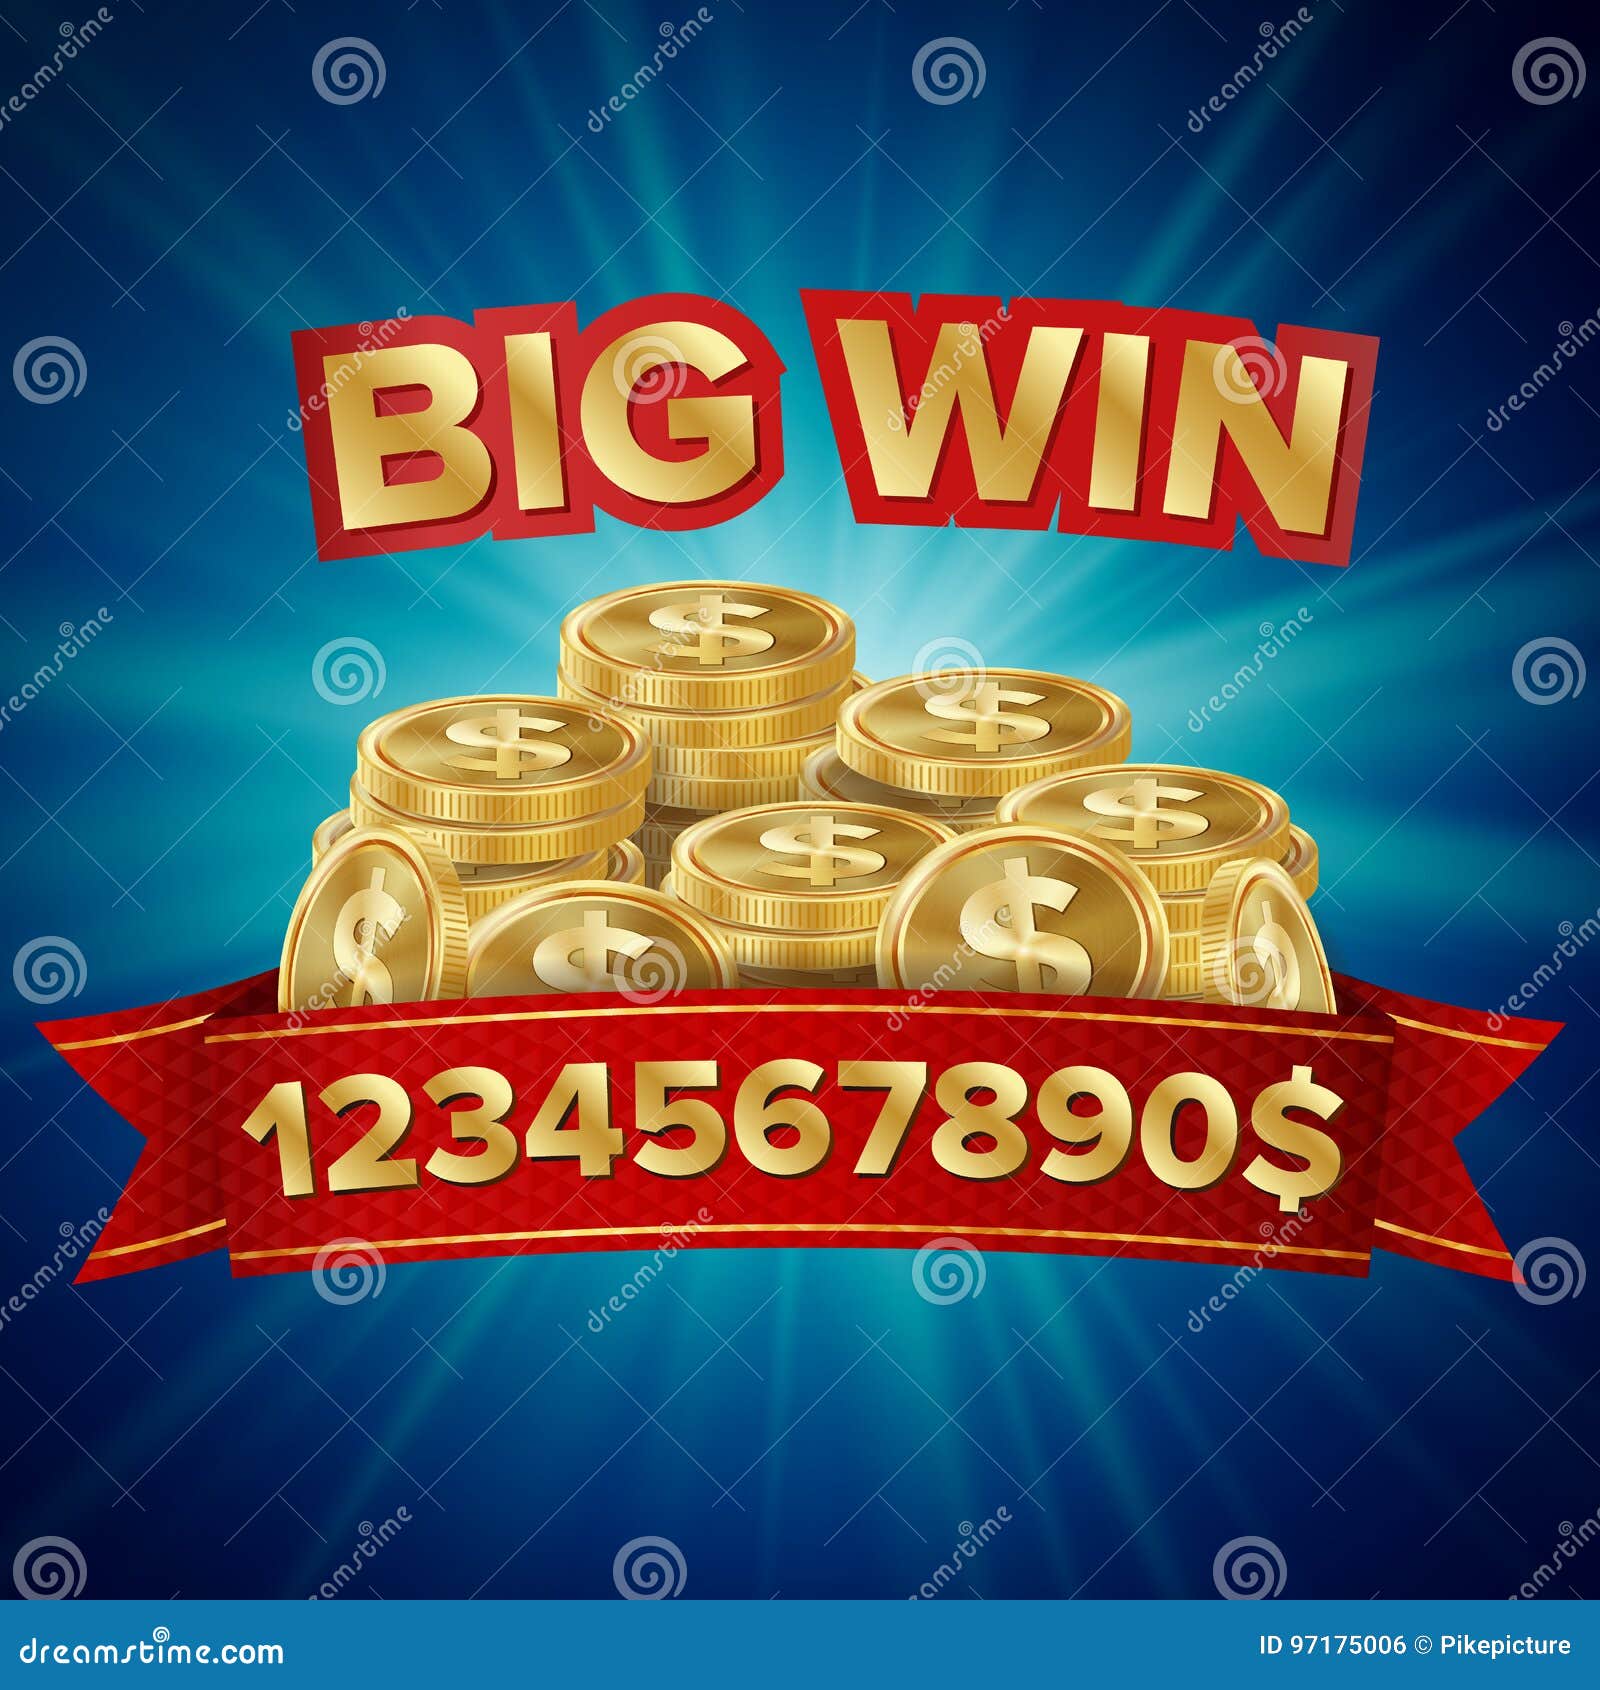 Big Win Vector Background For Online Casino Gambling Club Poker